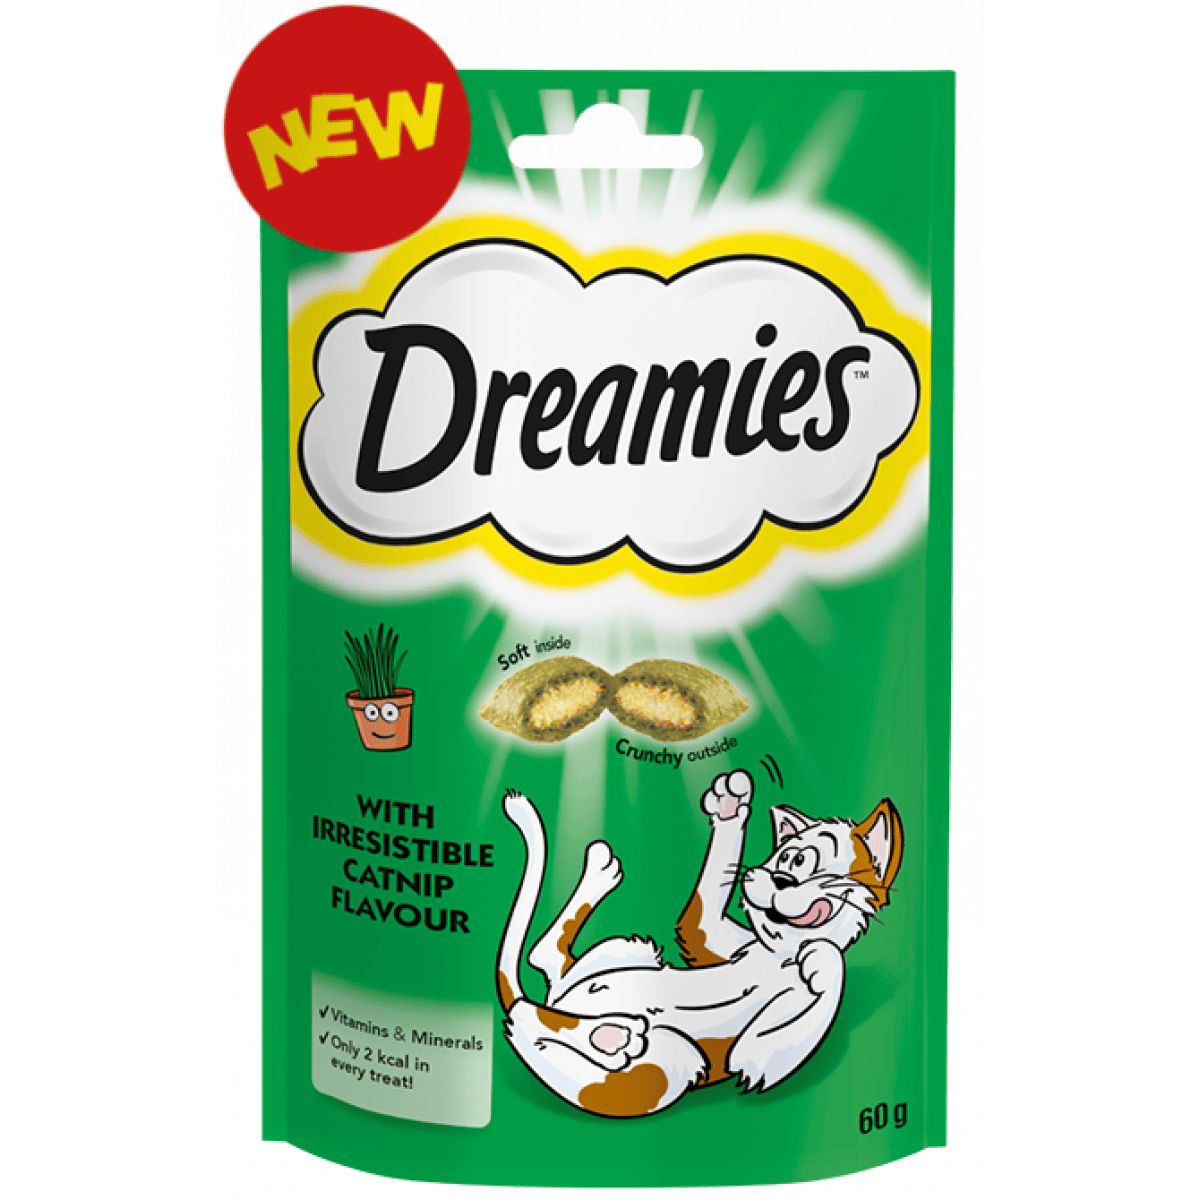 Dreamies Catnip Bag